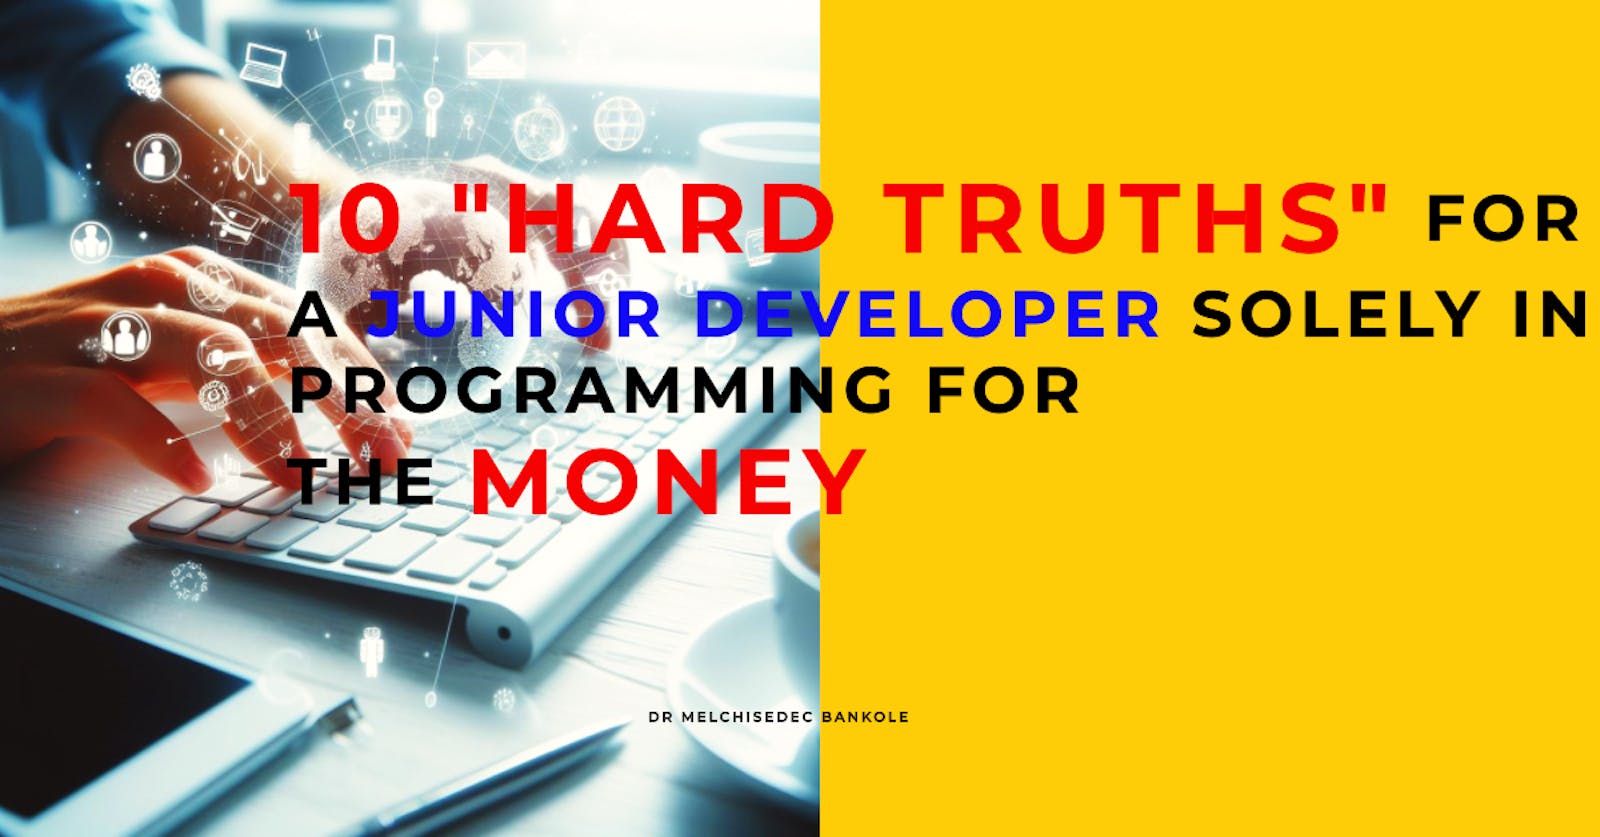 10 "Hard Truths" for a Junior Developer Solely In Programming for The Money